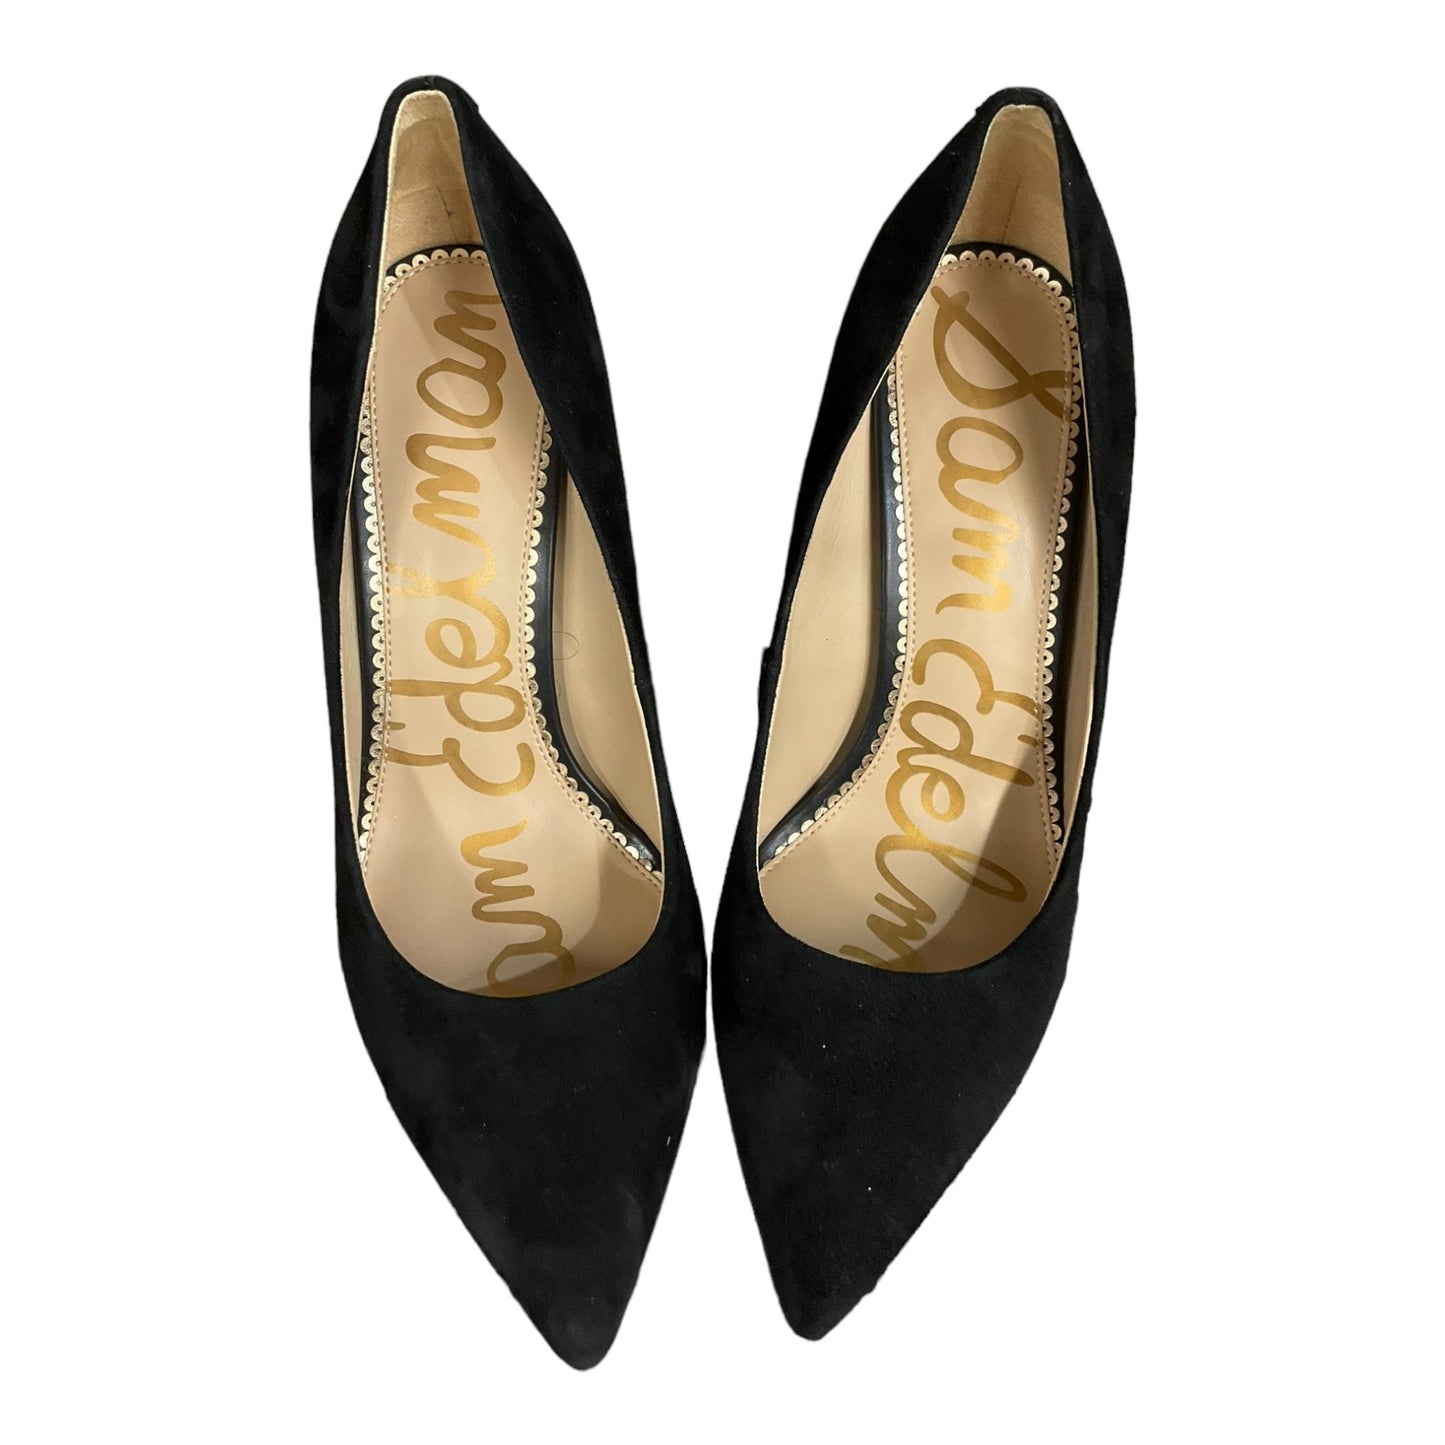 Black Shoes Heels Stiletto Sam Edelman, Size 10